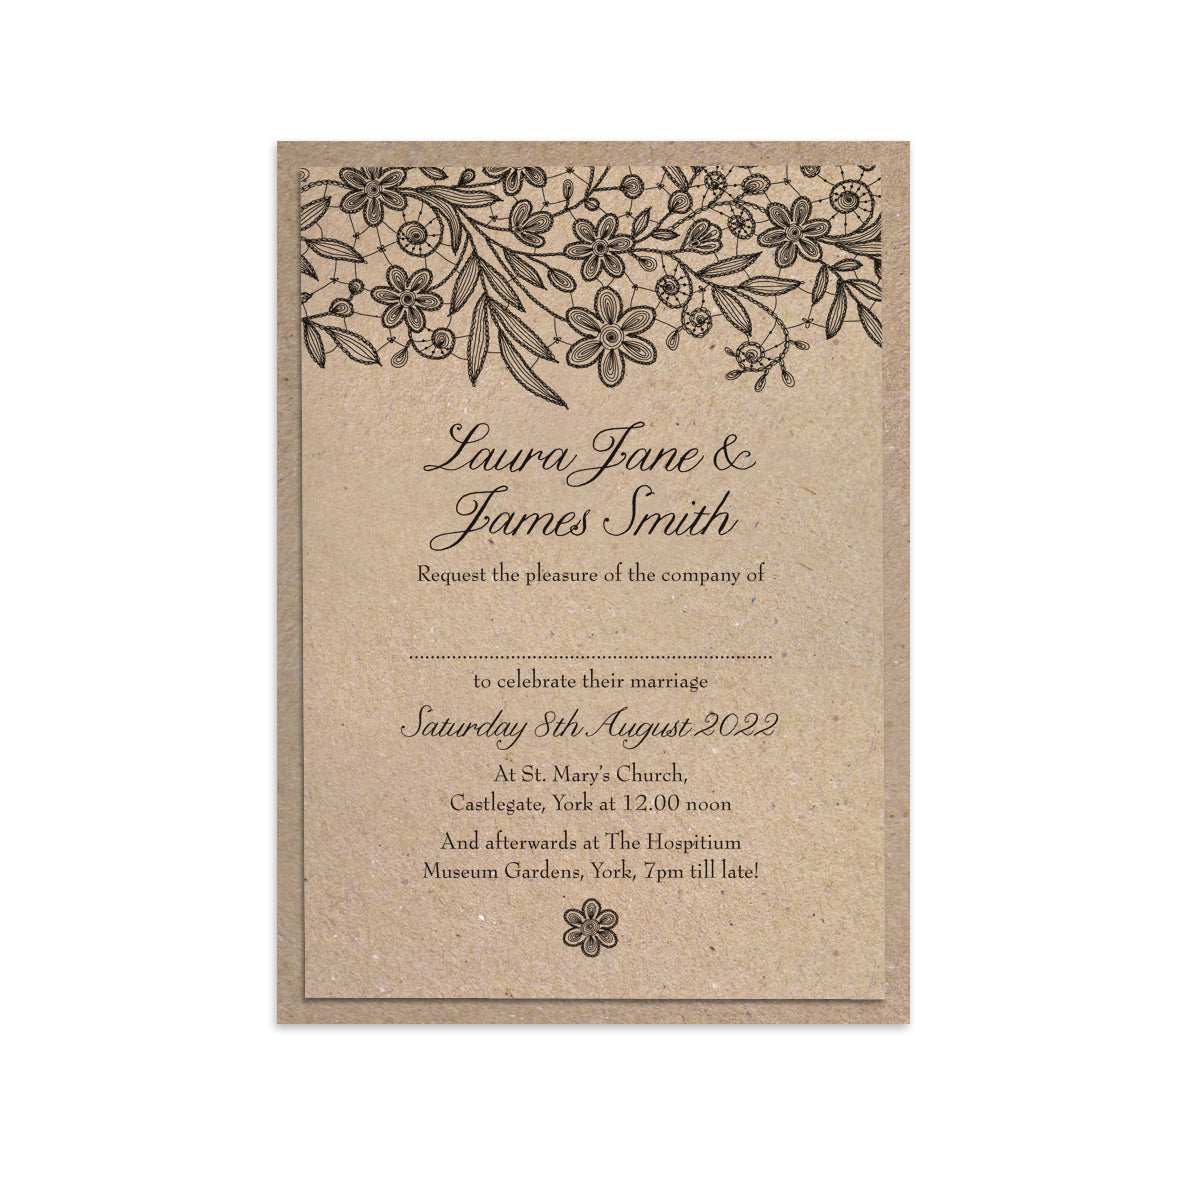 Kraft Paper Wedding Invitation with black lace design